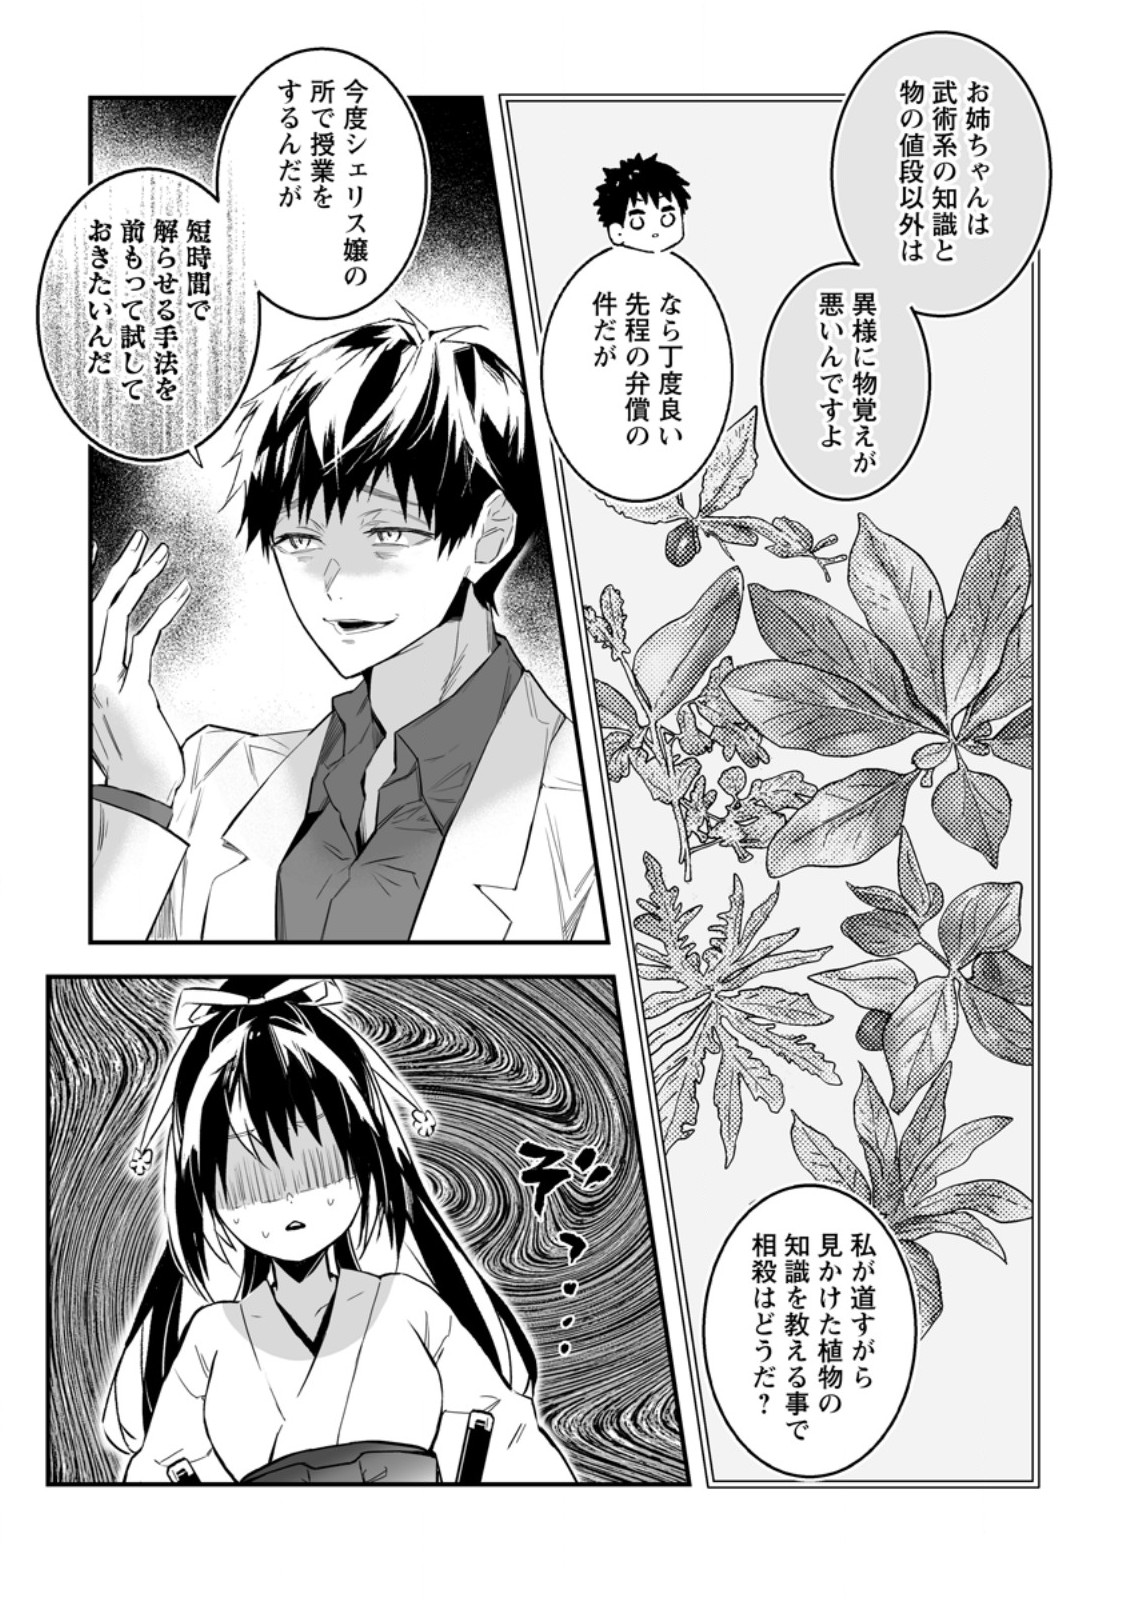 Hakui no Eiyuu - Chapter 35.2 - Page 1